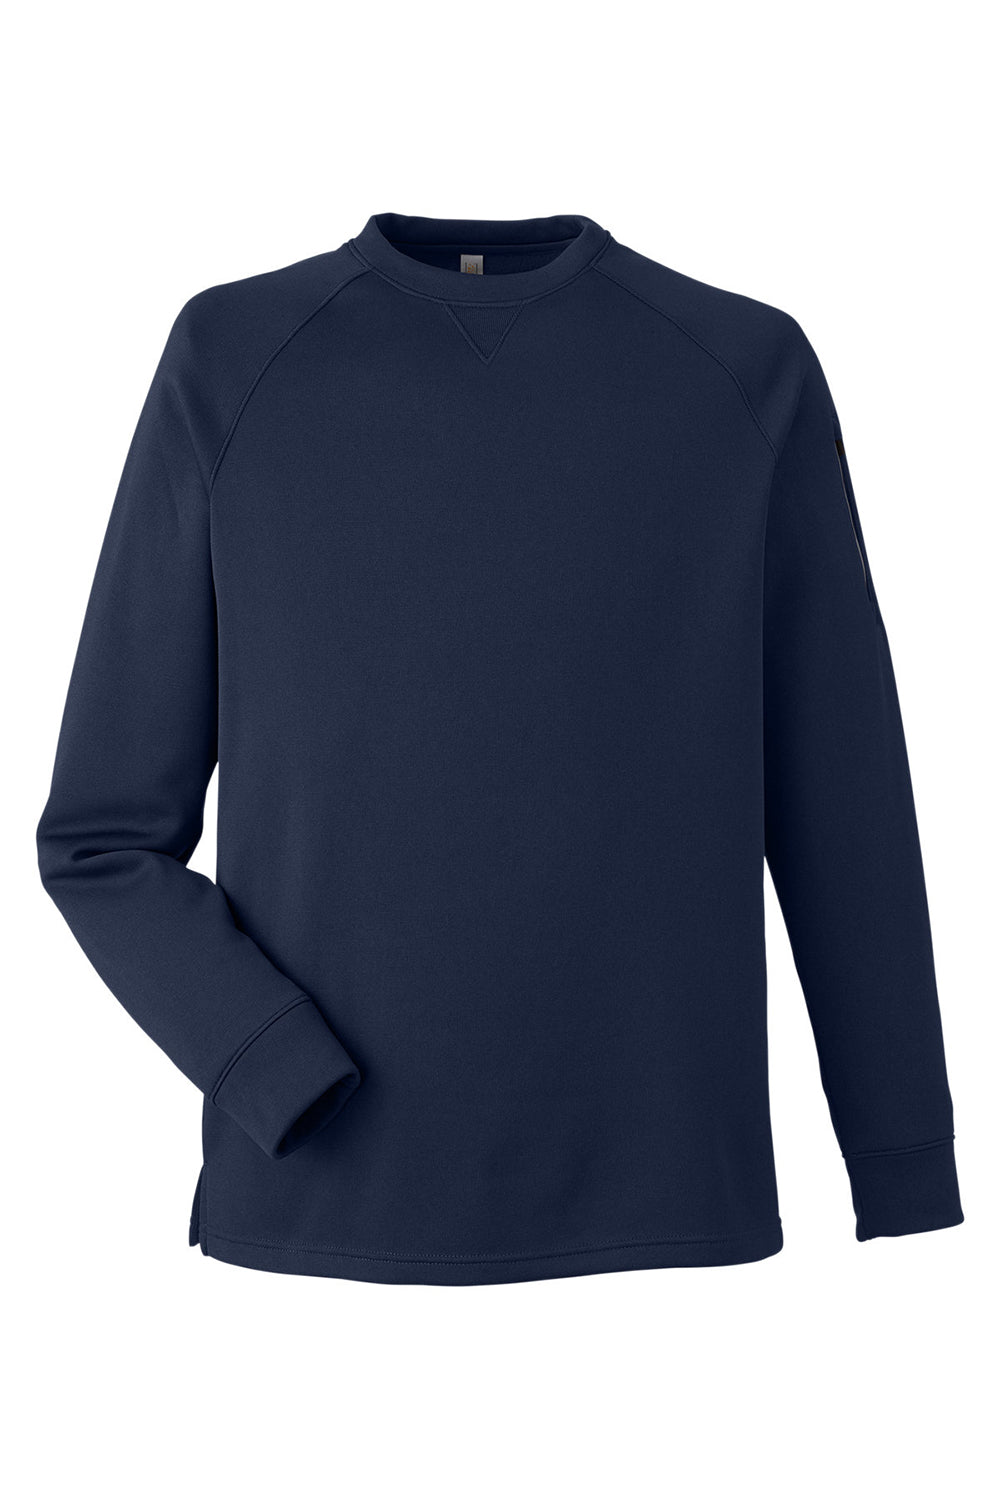 Core 365 CE800 Mens Fusion ChromaSoft Fleece Crewneck Sweatshirt Classic Navy Blue Flat Front